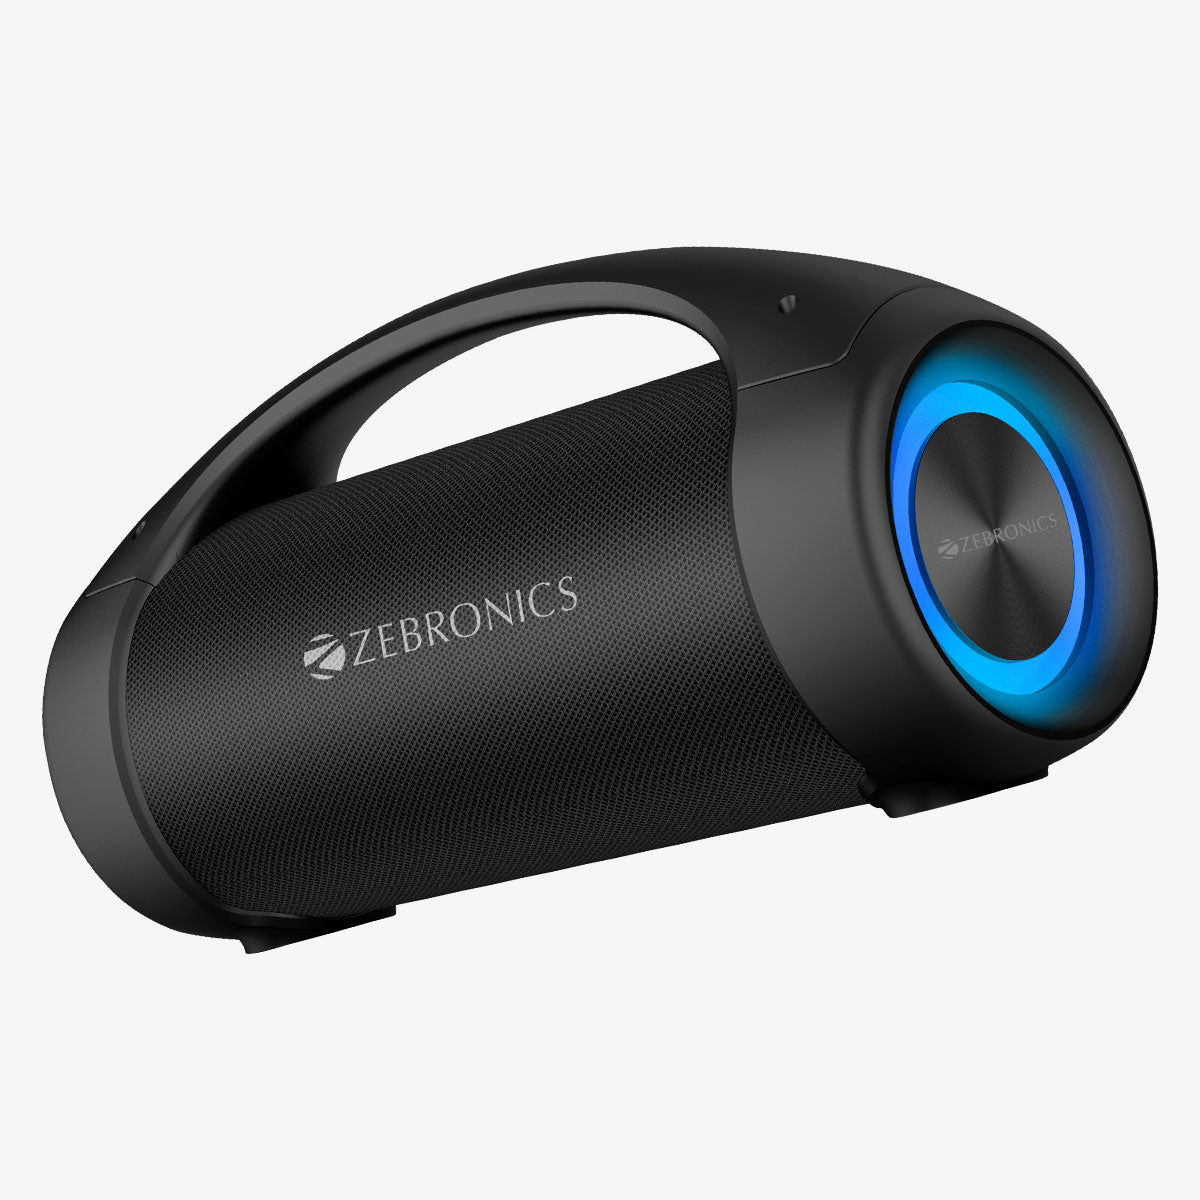 Zeb-Sound Feast 400 - Wireless Speaker - Zebronics